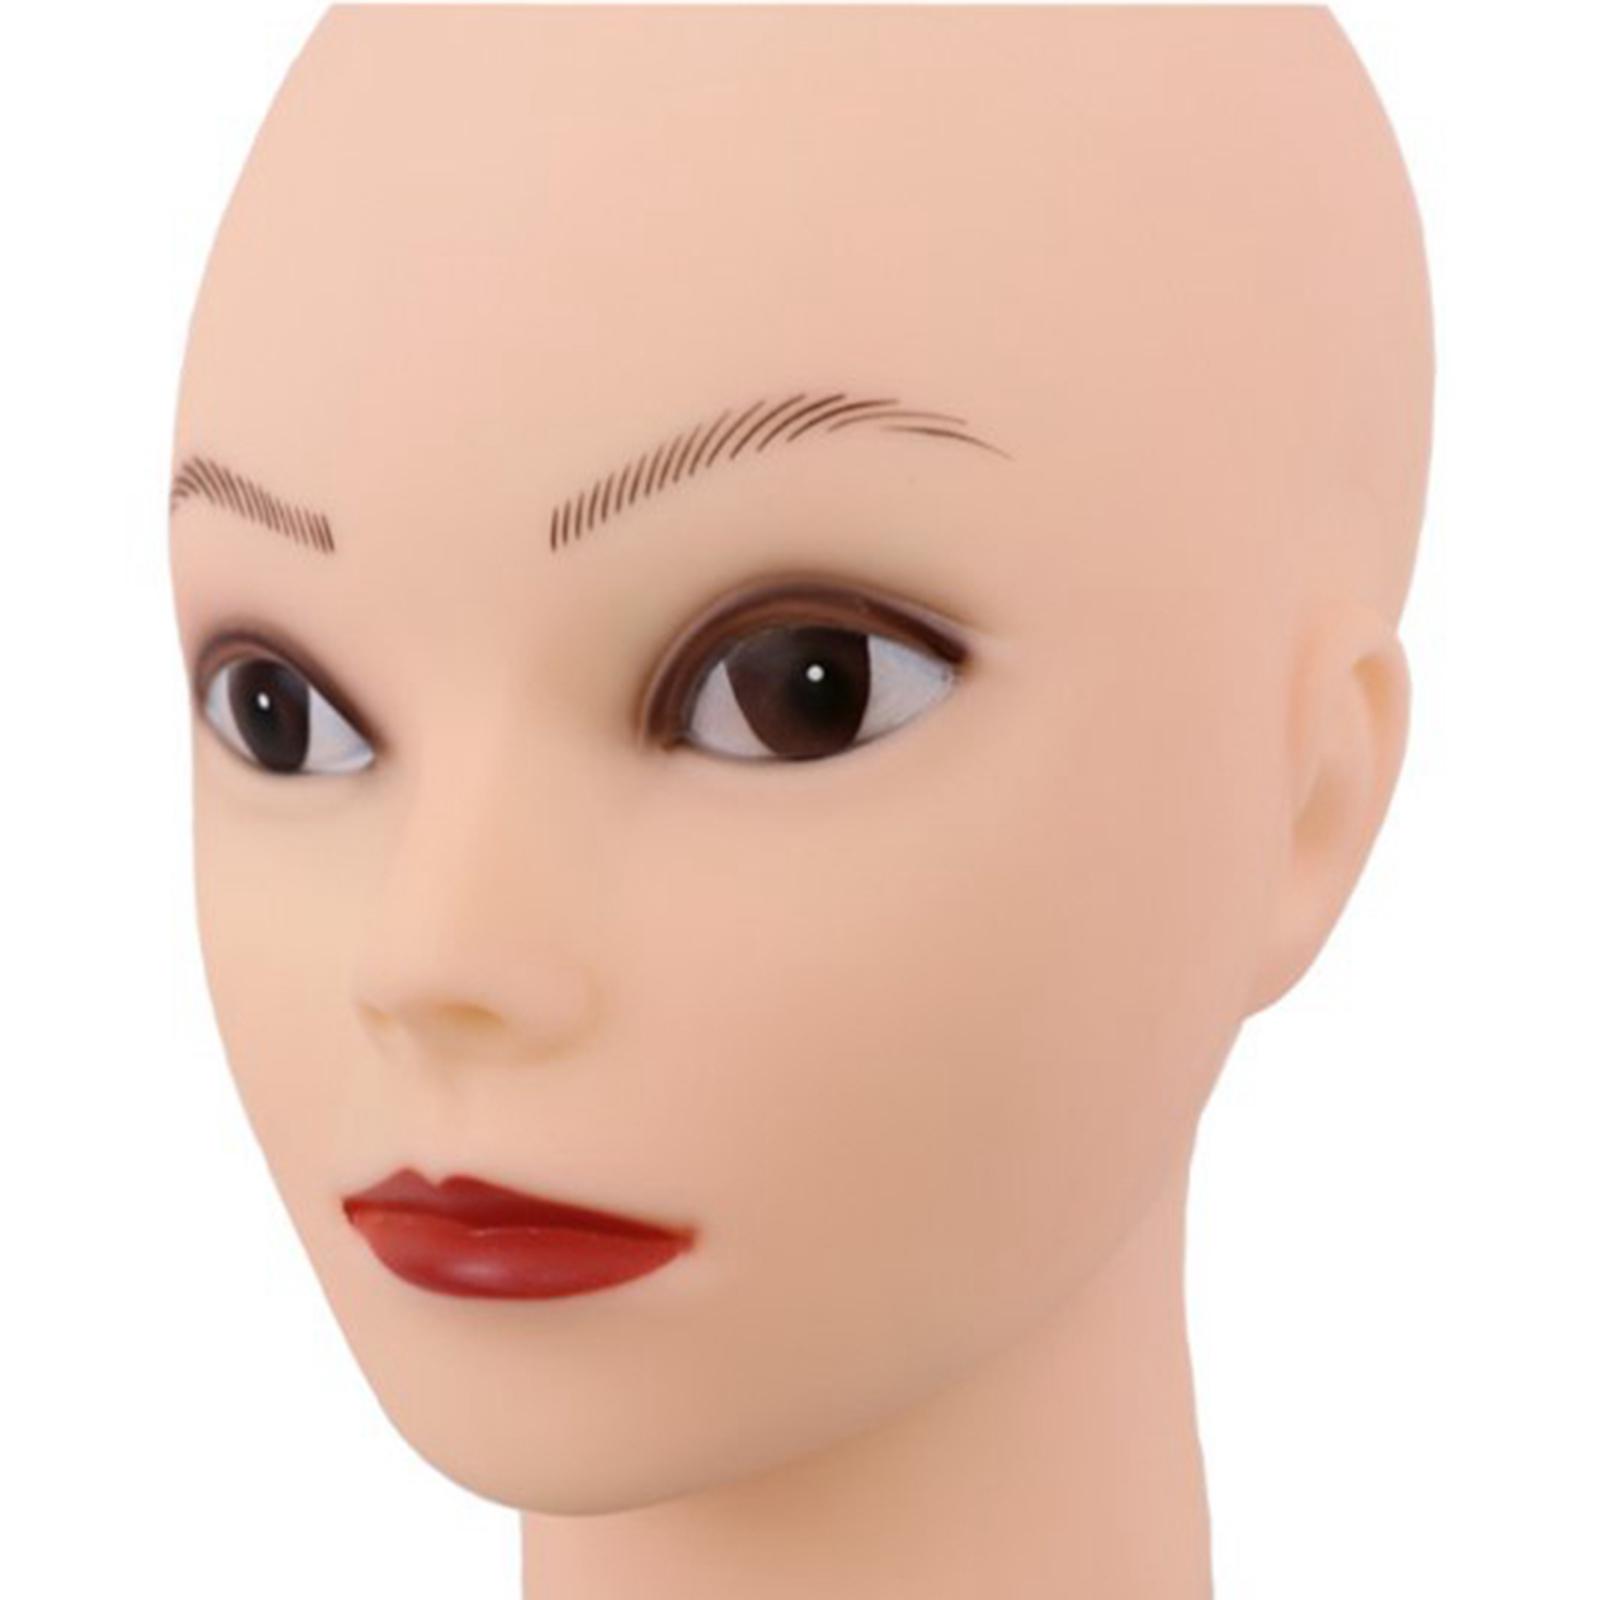 Female Head Model Mannequin Wig Hair Glasses Manikin Display